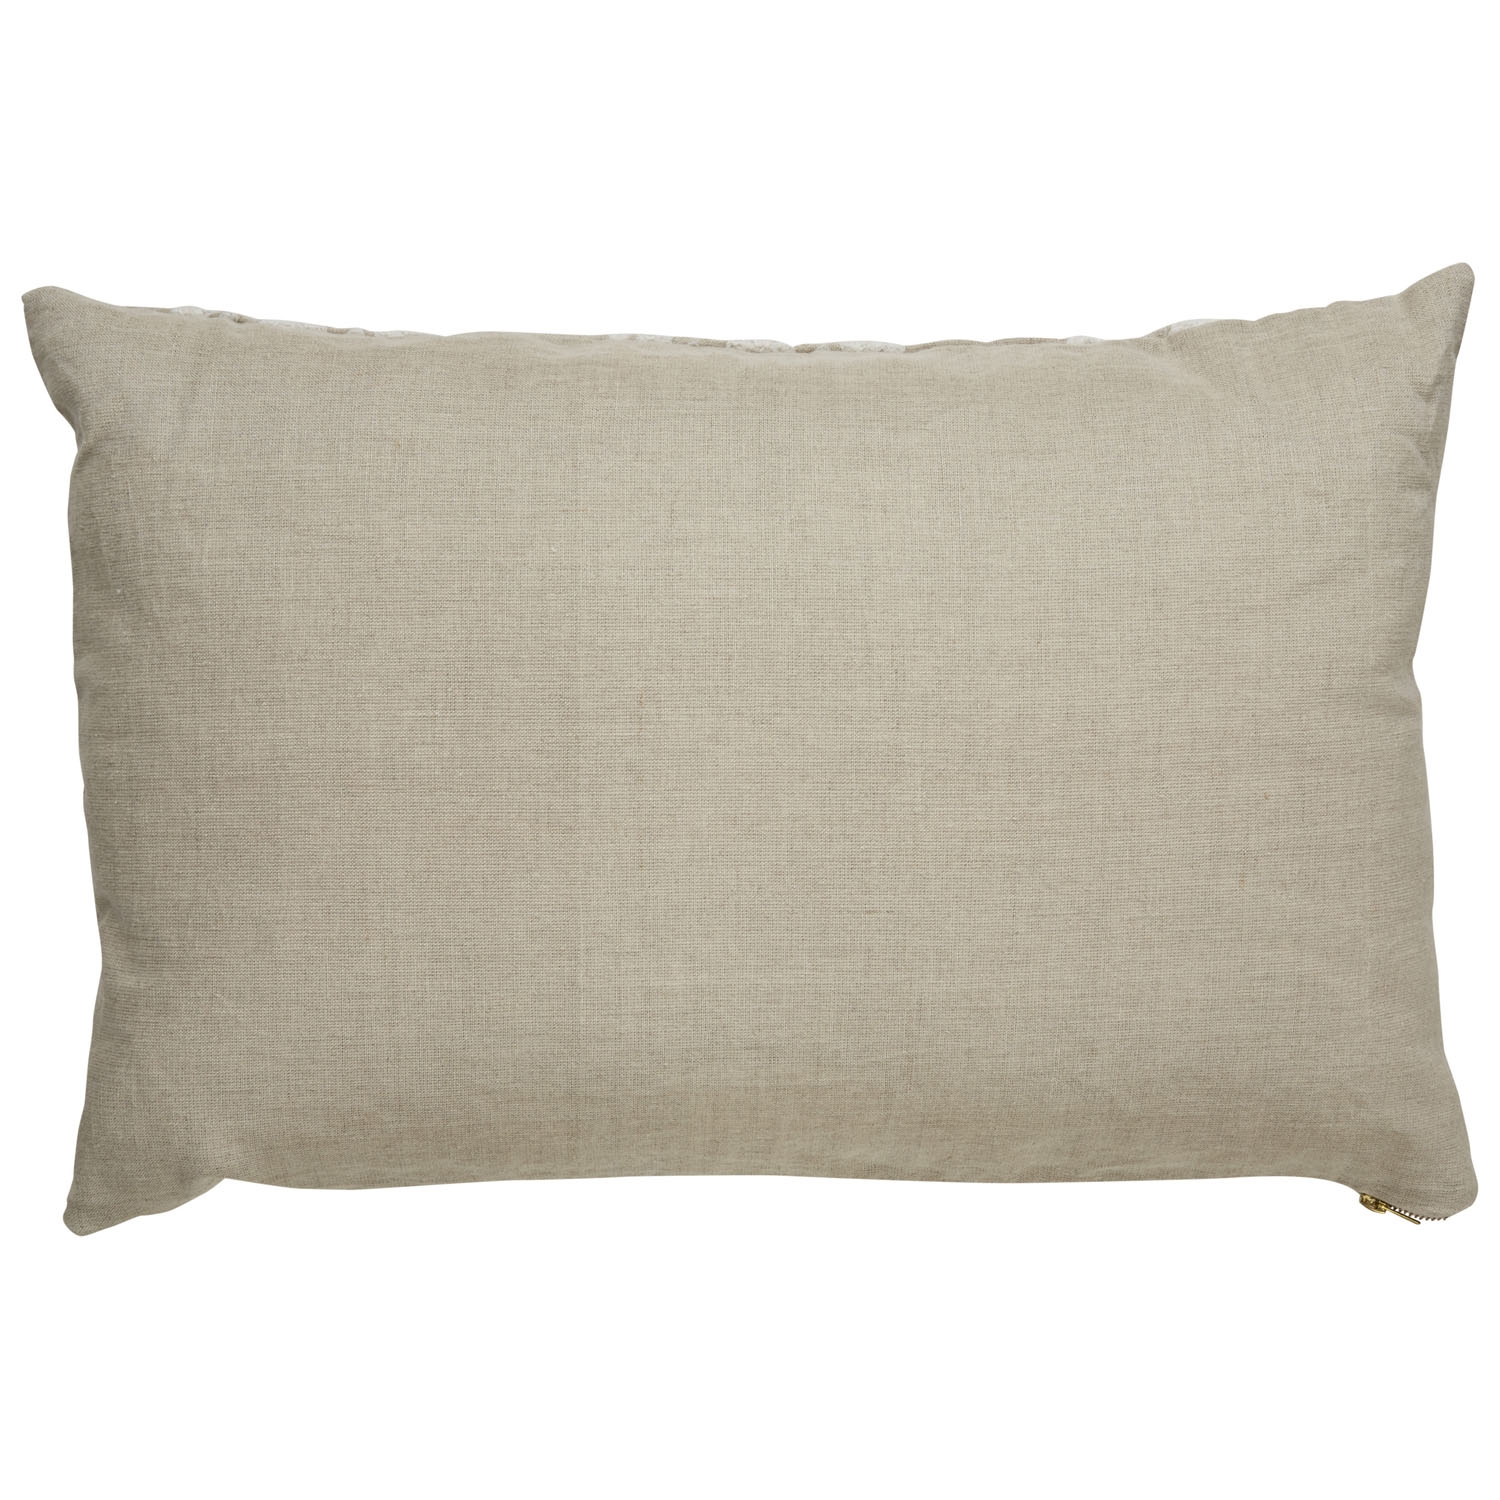 Design (US) Beige 16"X24" Pillow - Image 1